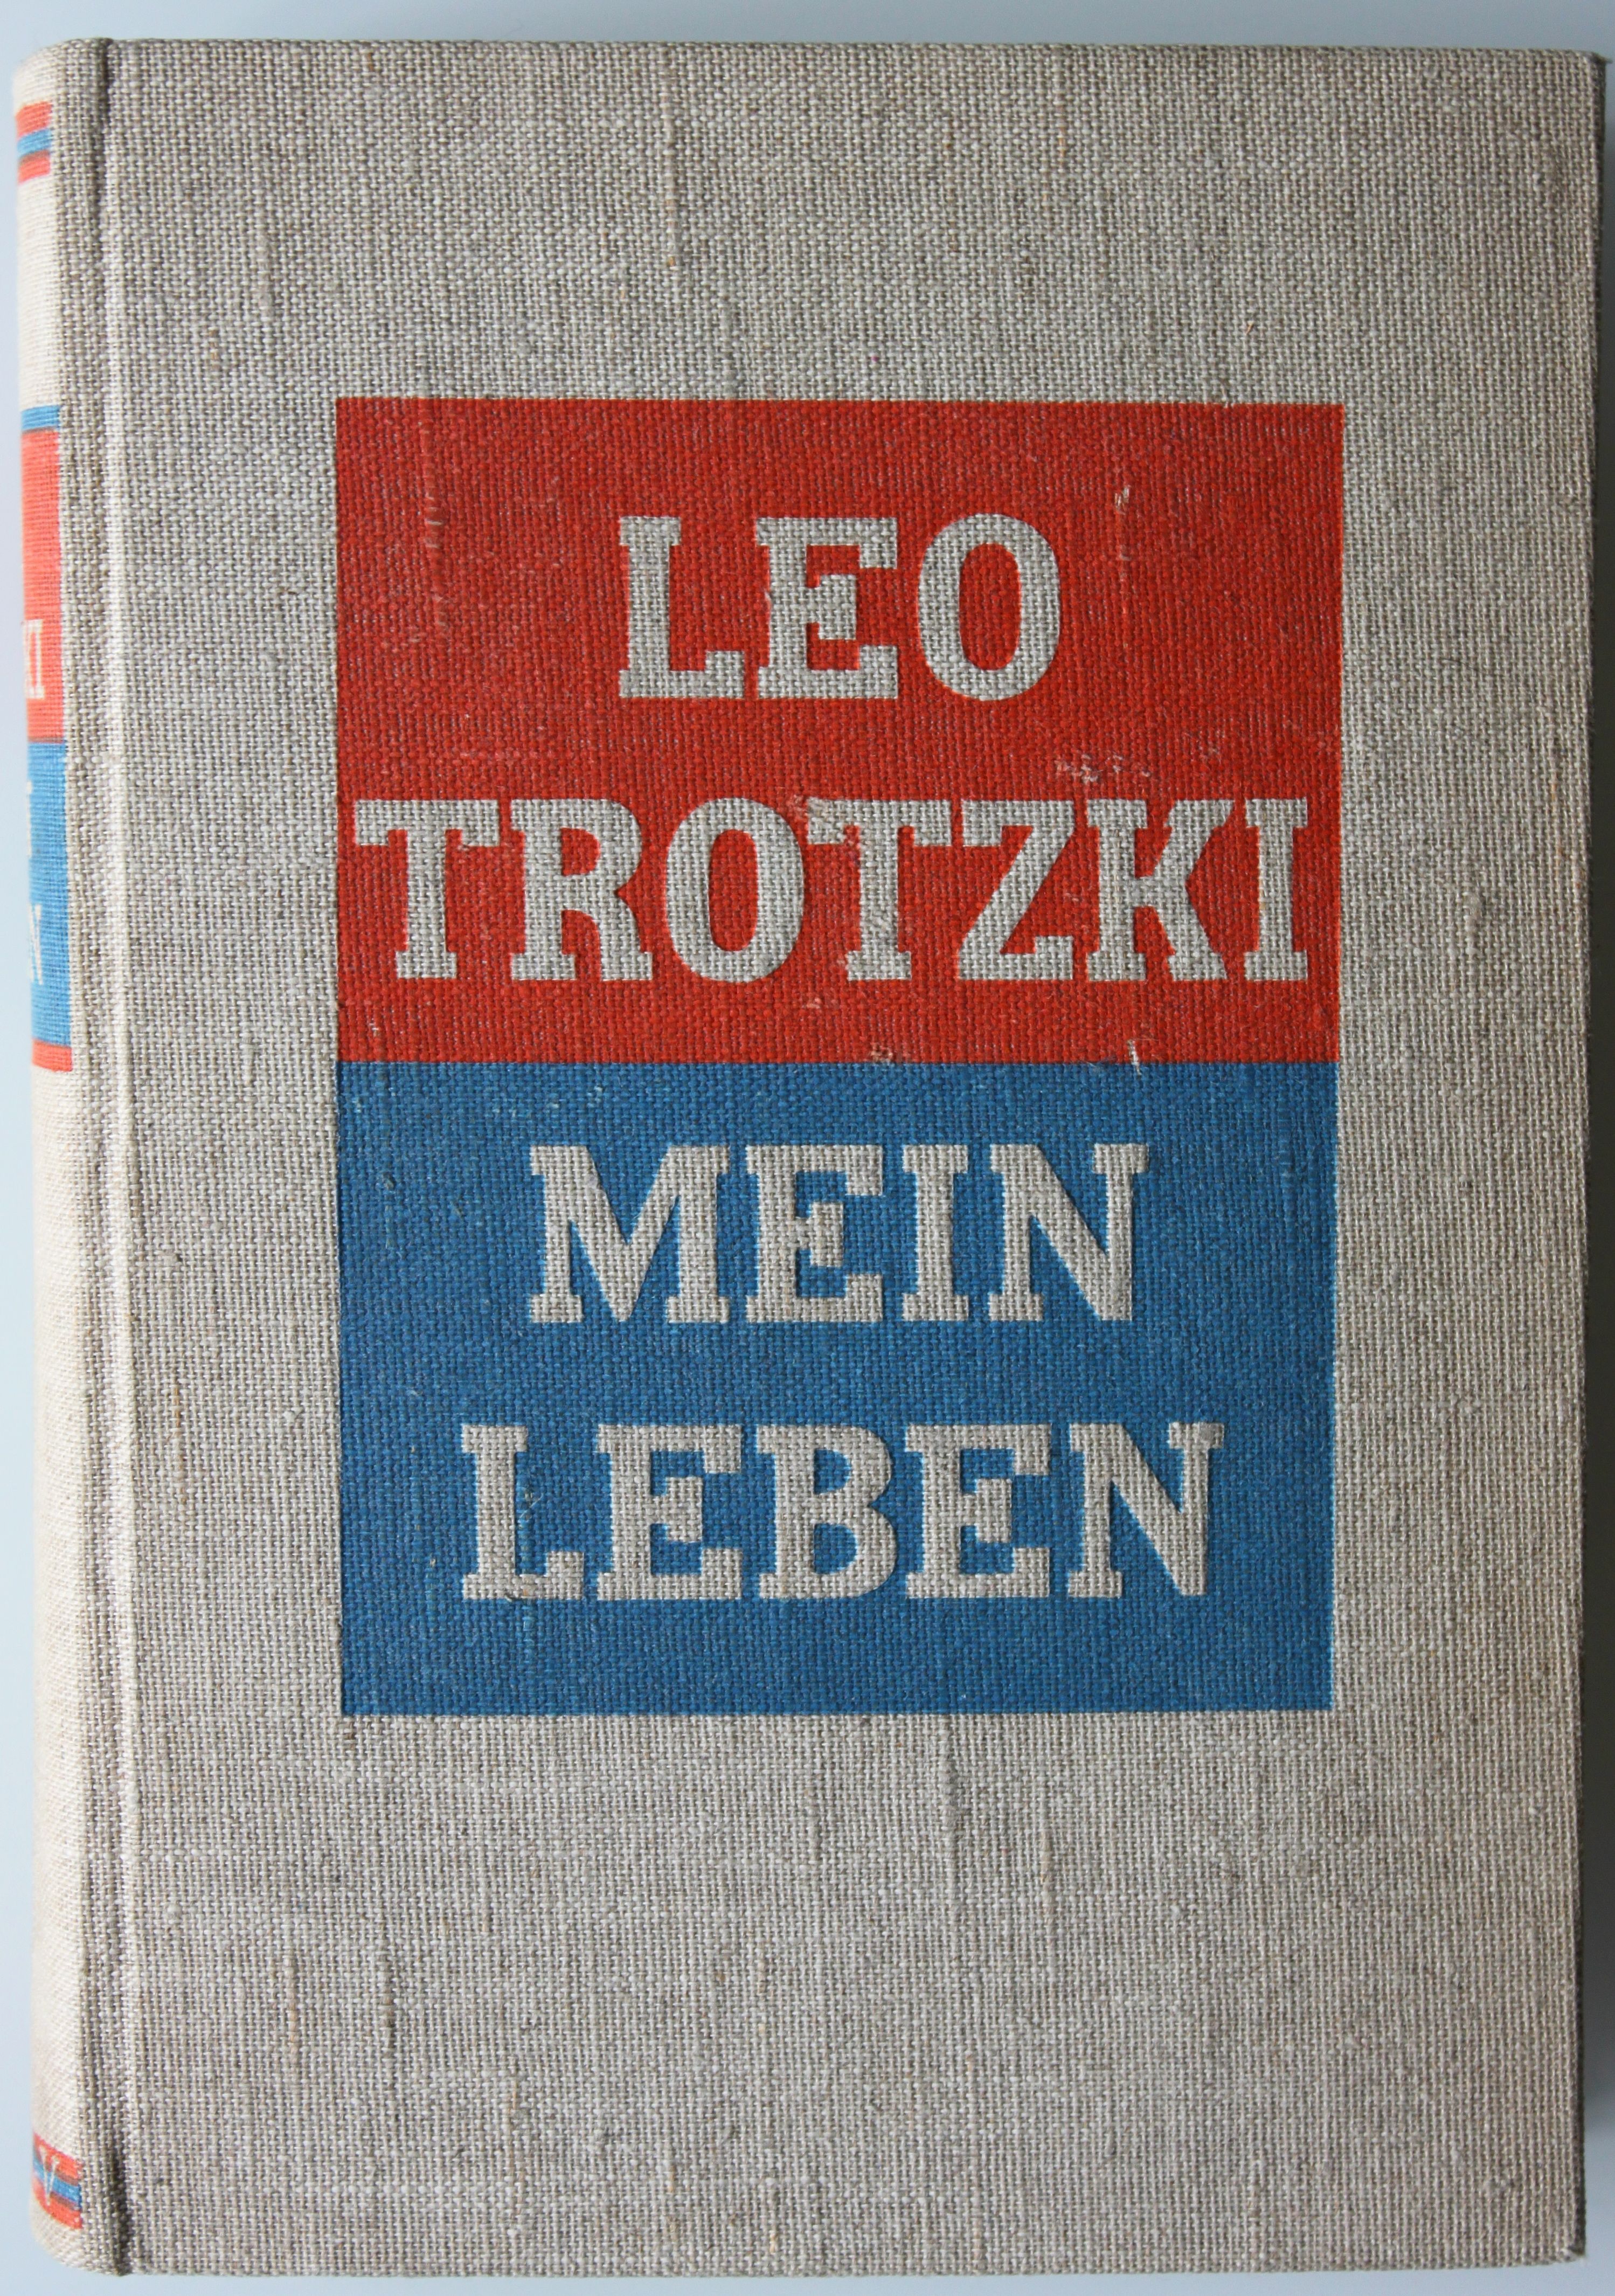 Trotzki, Mein Leben, 1930